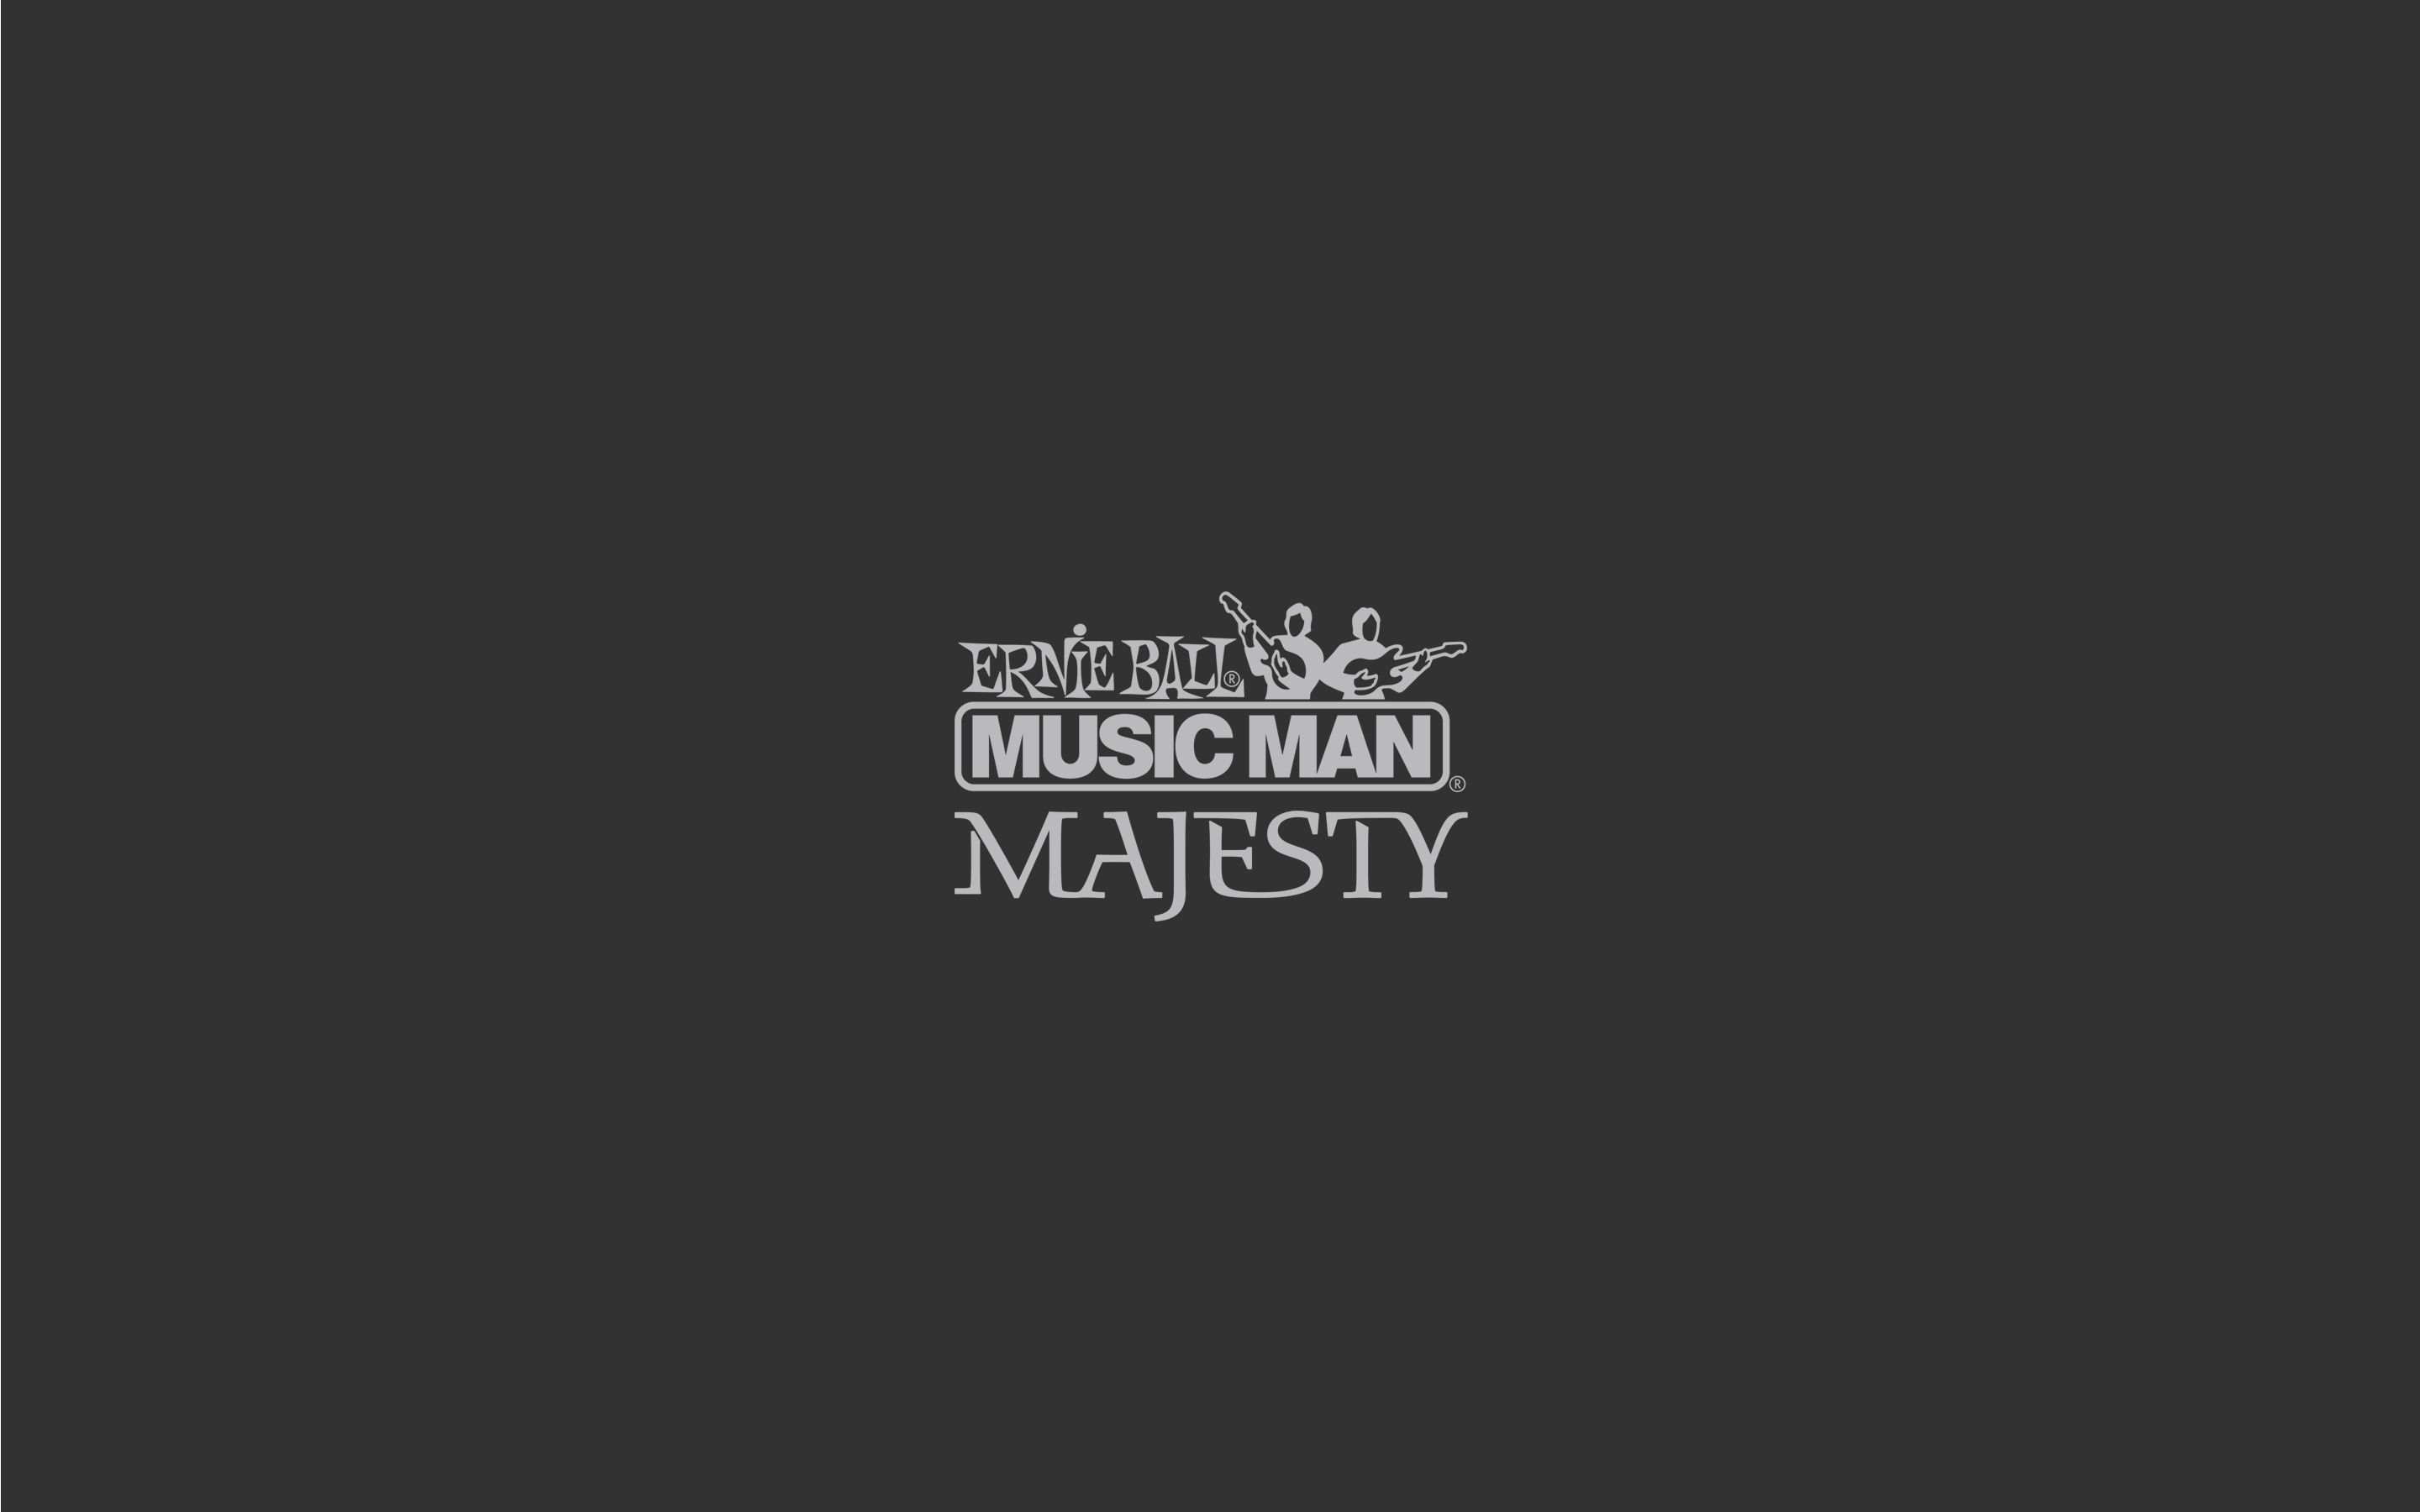 Wallpaper, music man, ernie ball, majesty guitars, John Petrucci, guitar, logo 2880x1800